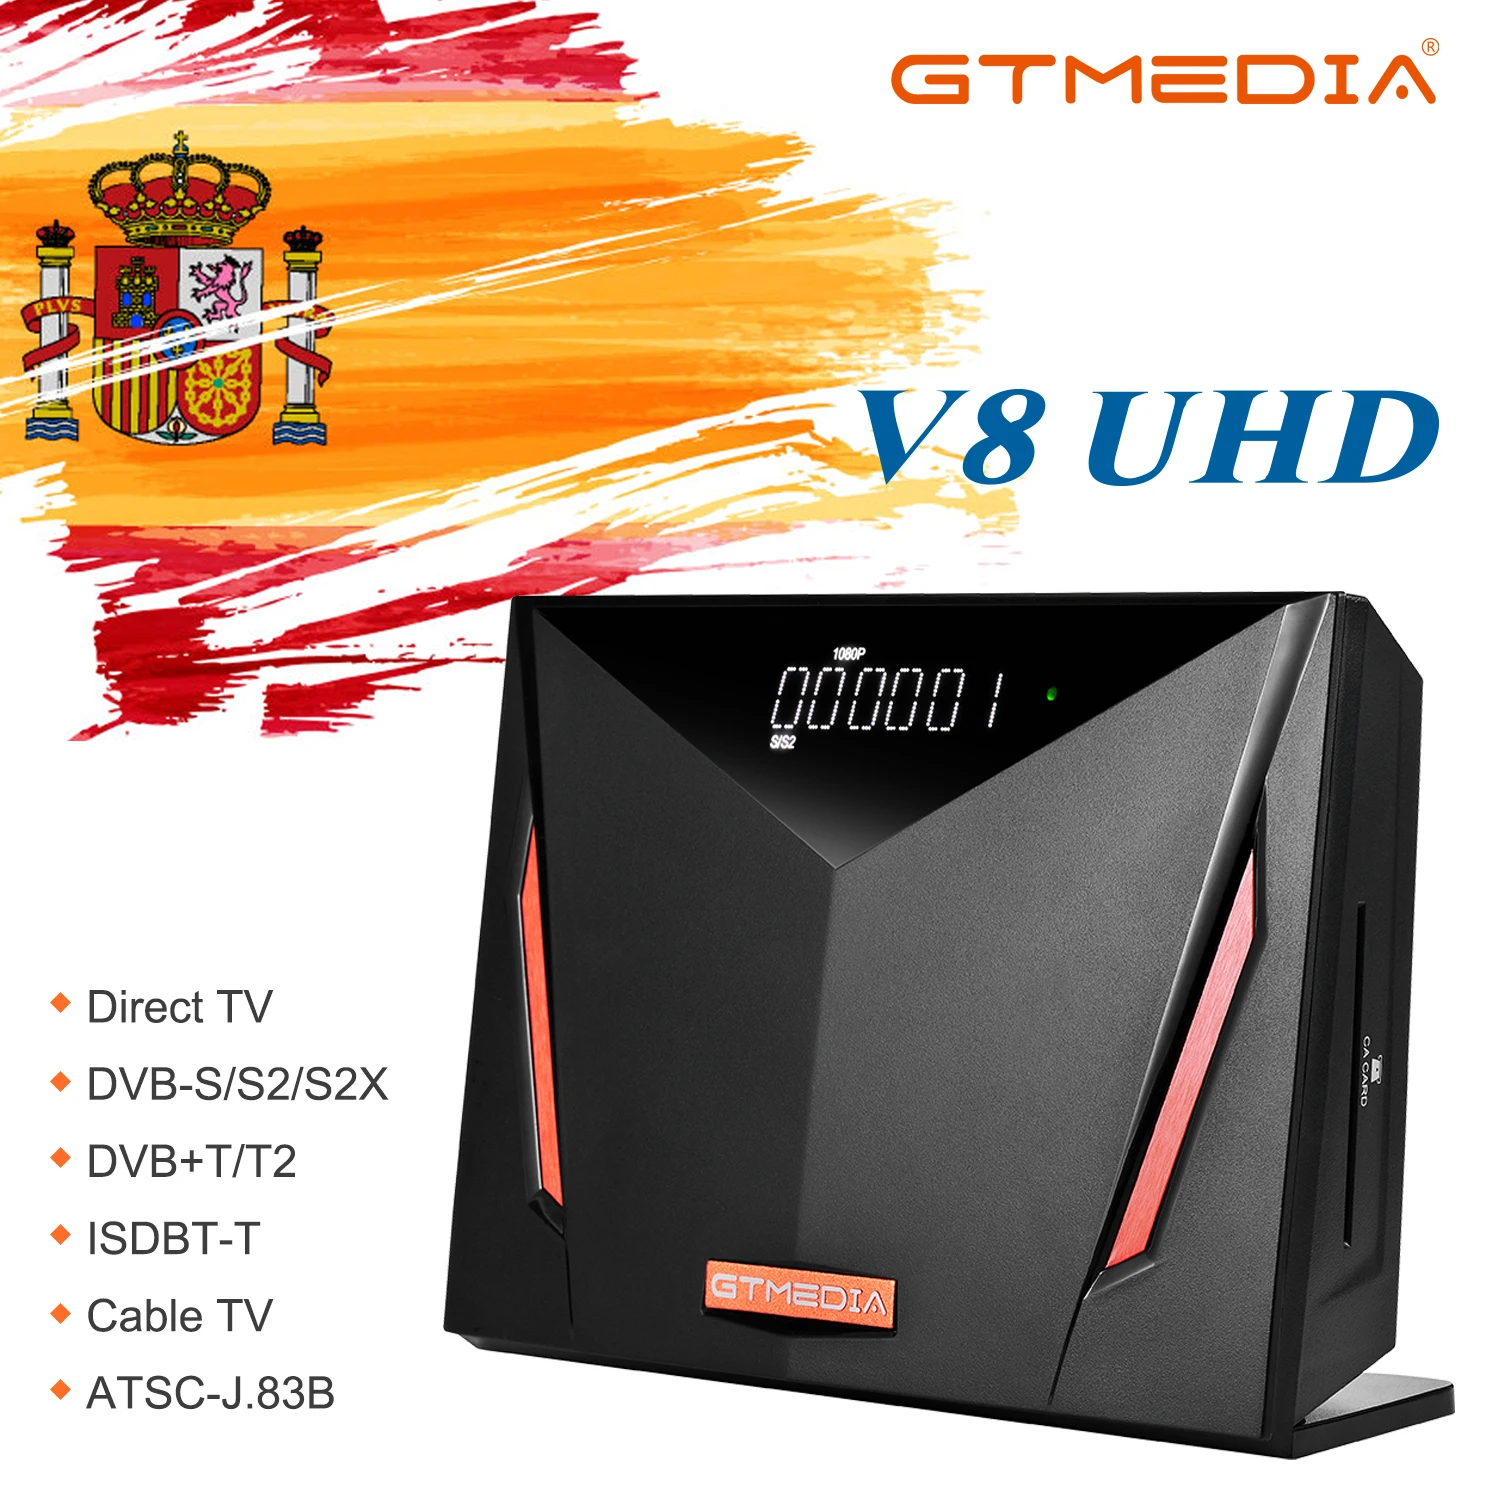 

GTmedia V8 UHD Satellite Receiver DVB-S2/S2X/T/T2/Cable,m3u,4k,H.265,Built-in Wifi,T2-MI,1080p,PK V8 NOVA Shipped From Spain